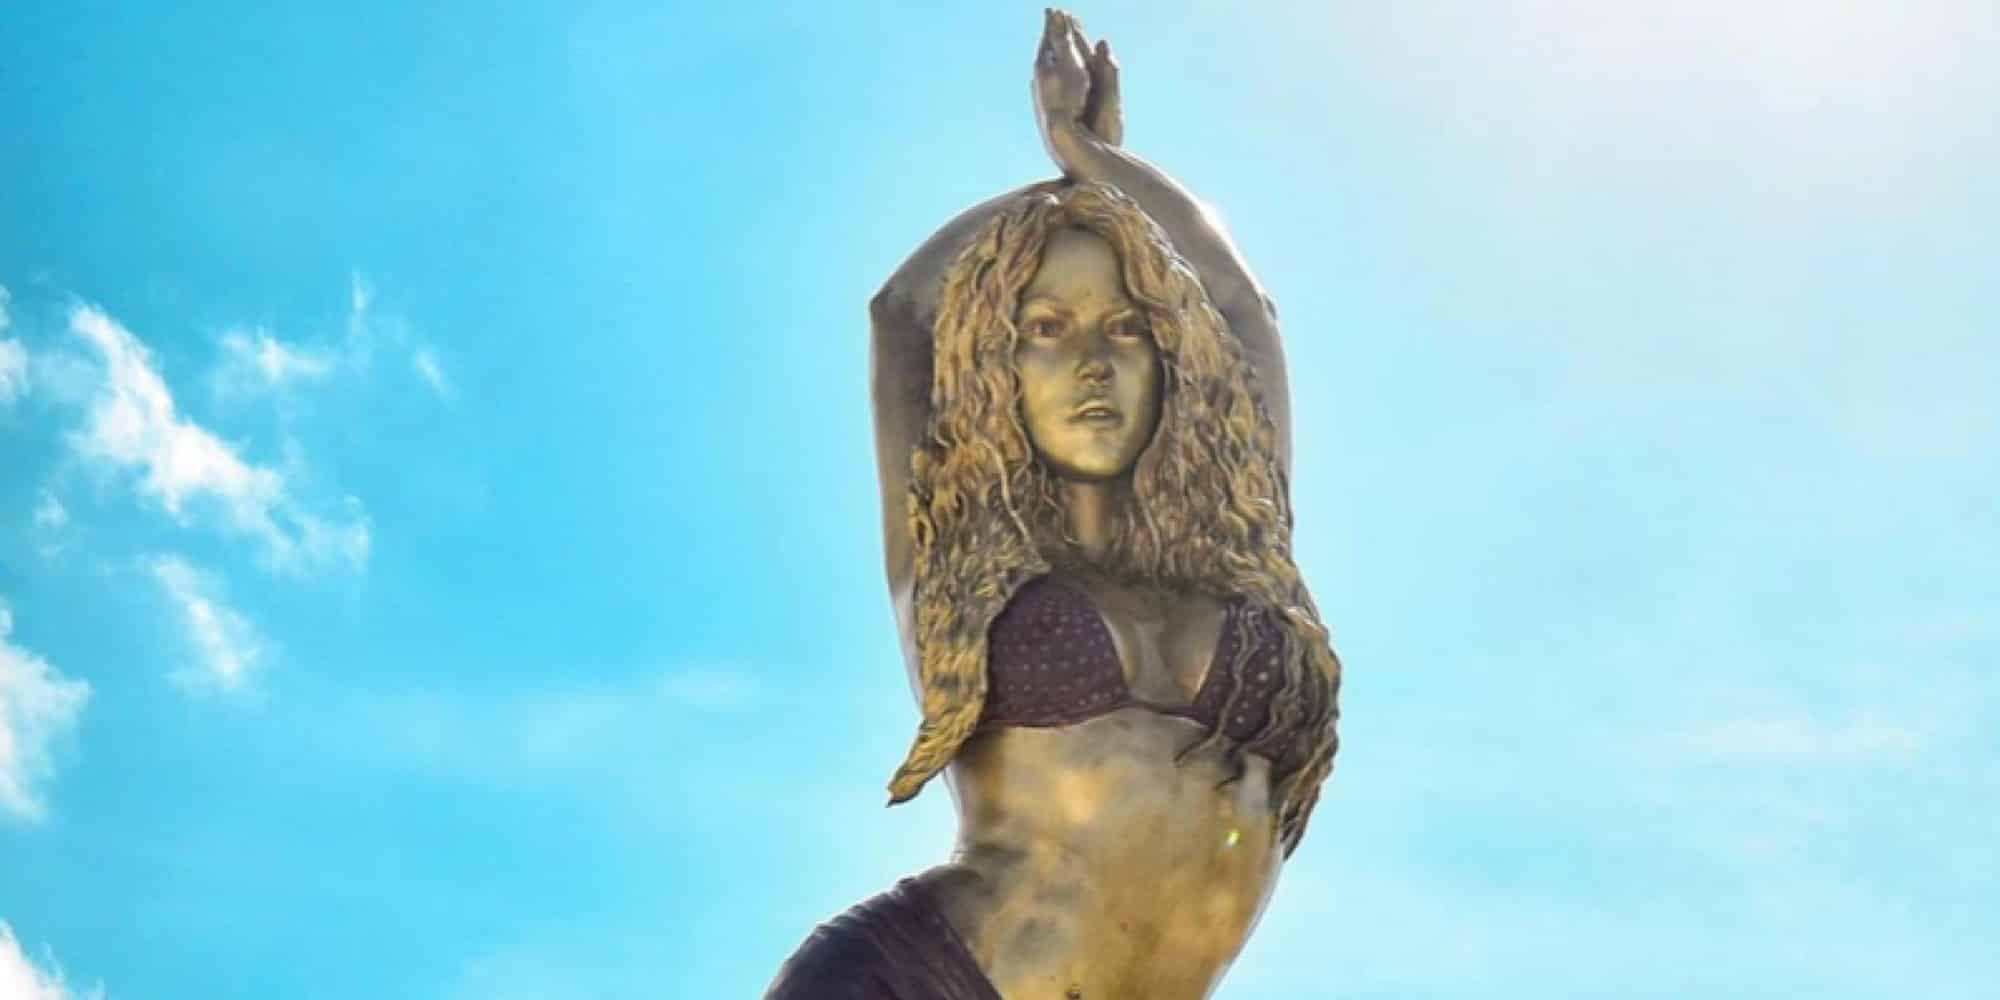 H Σακίρα έγινε άγαλμα 6 μέτρων στην Κολομβία